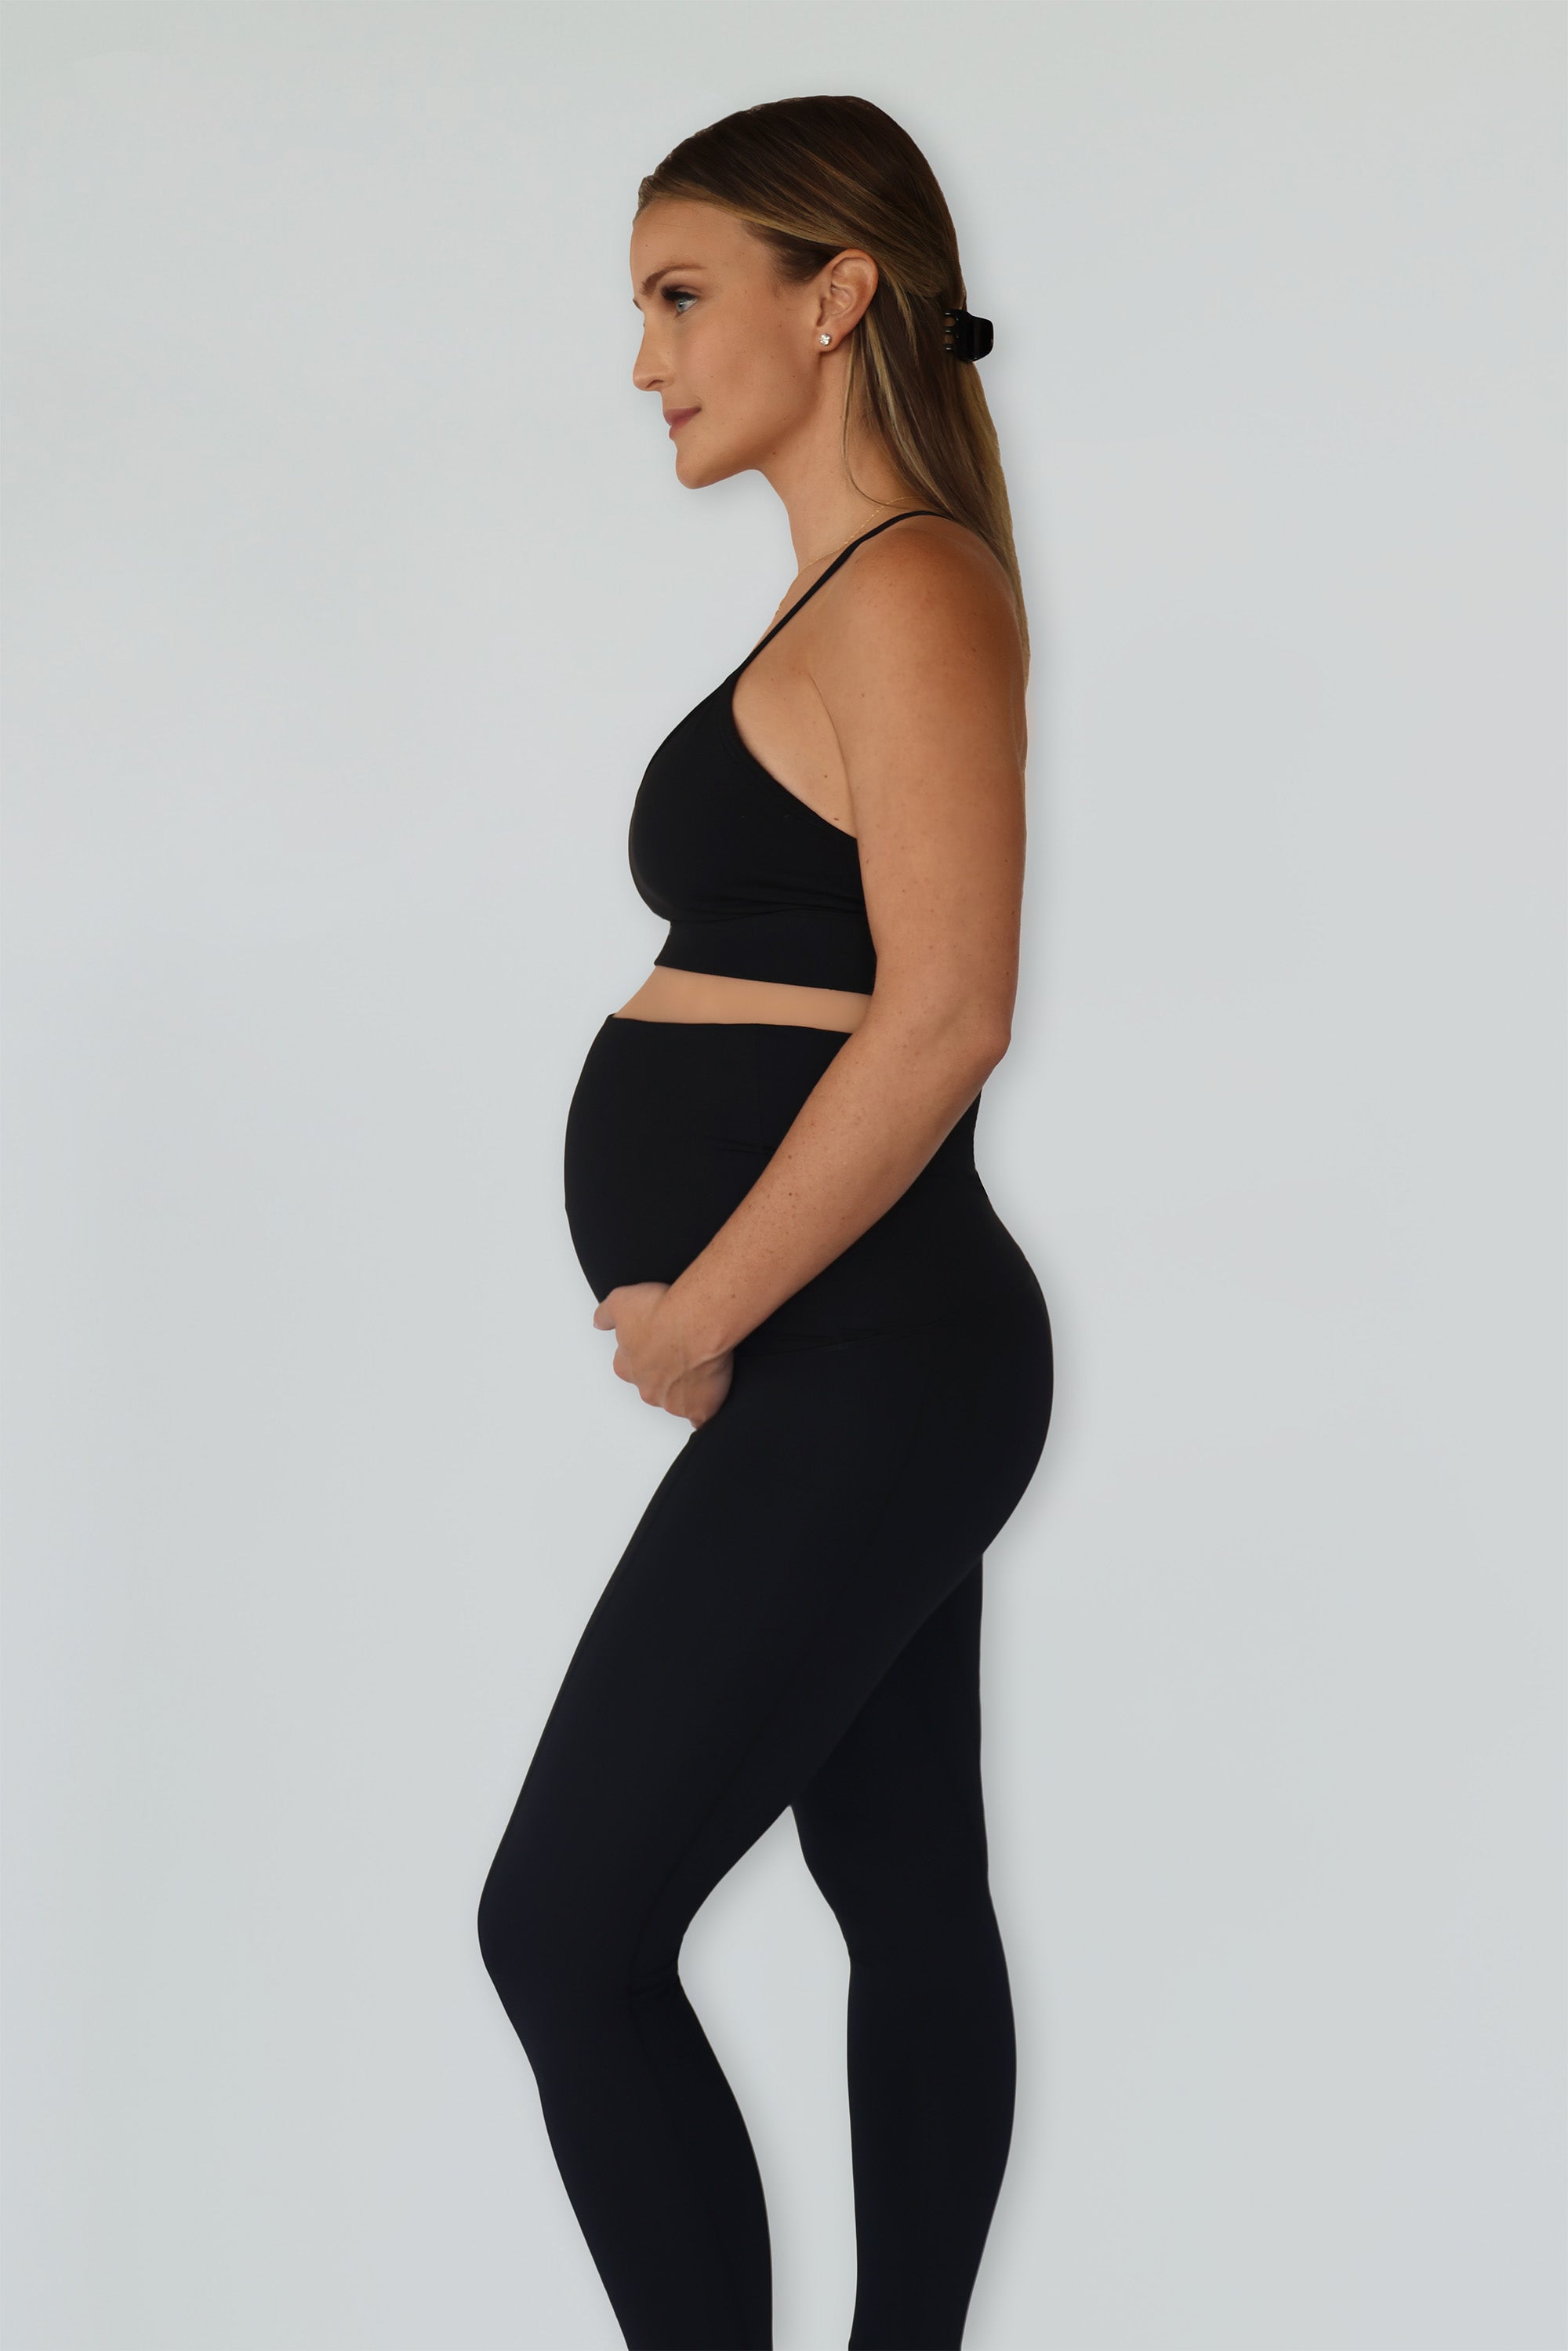 Leggings Size Chart – Femy Maternity